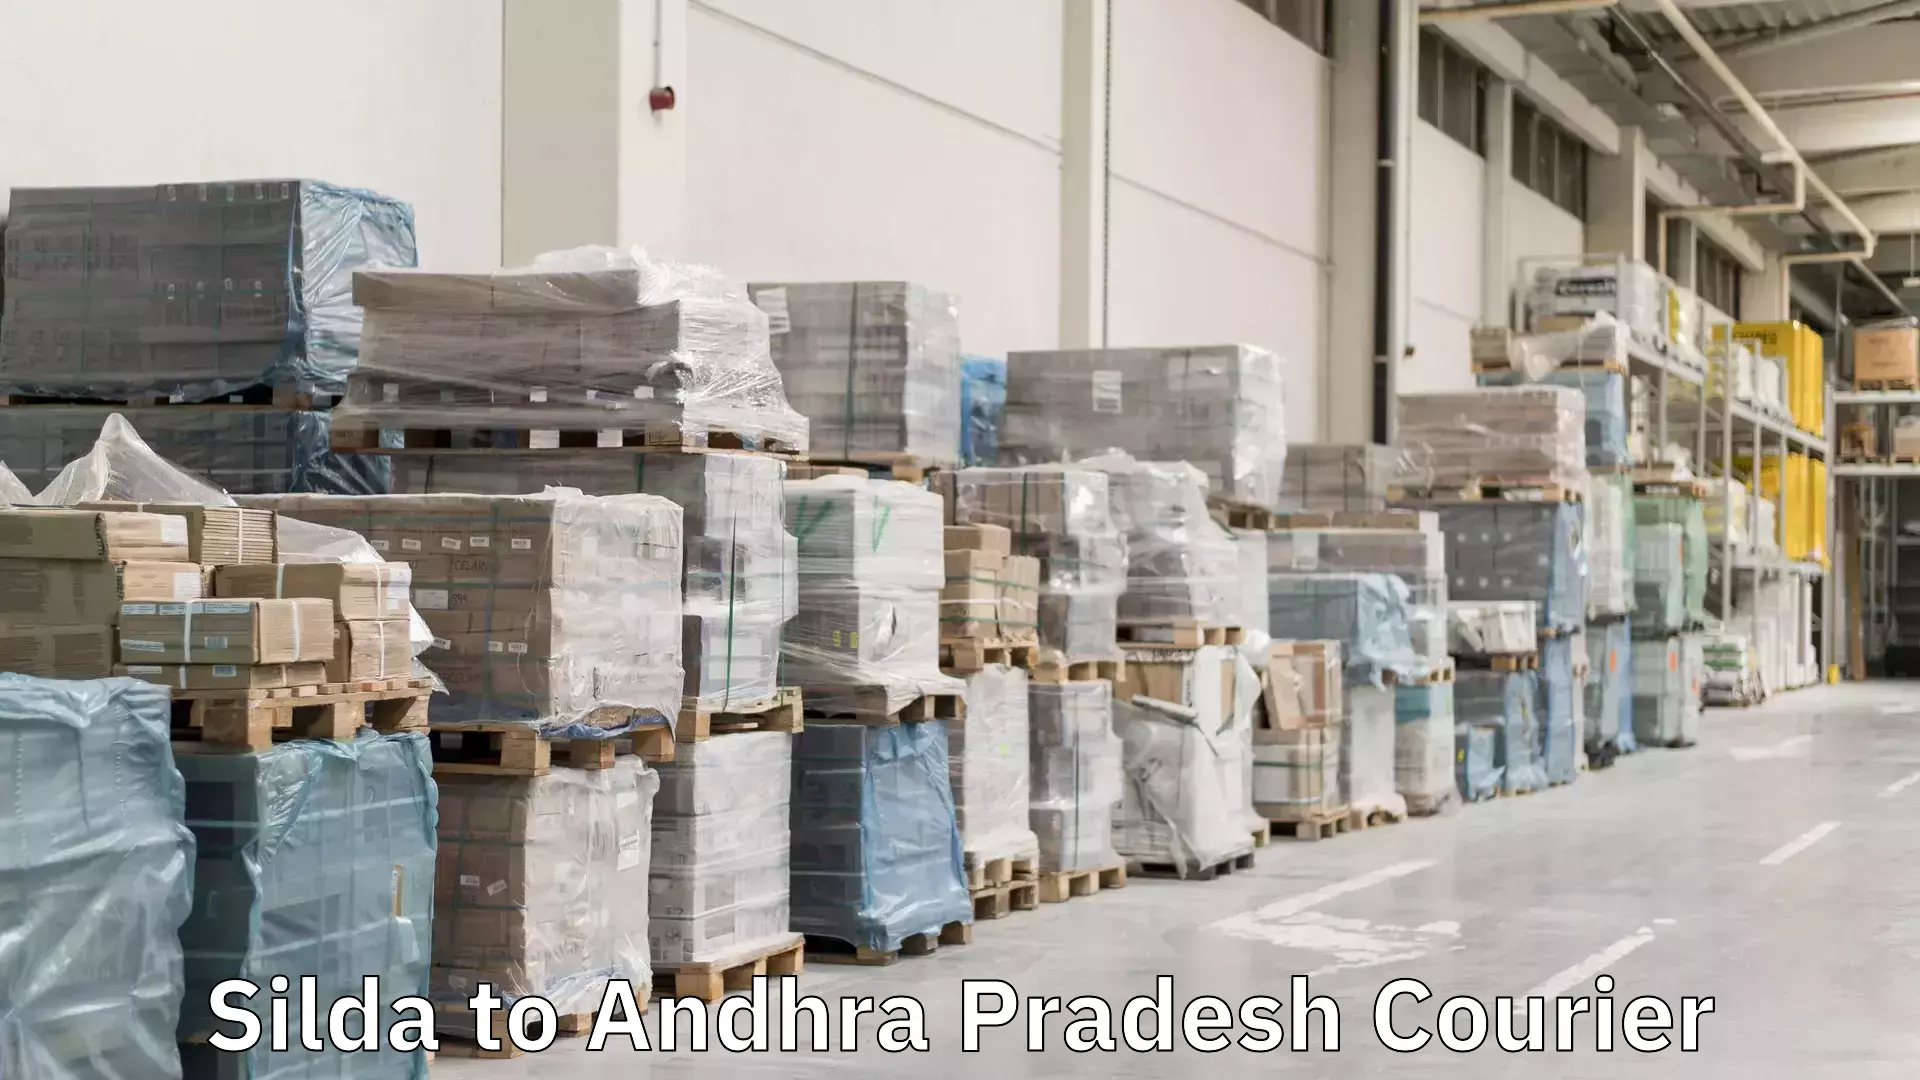 International courier networks Silda to Andhra Pradesh